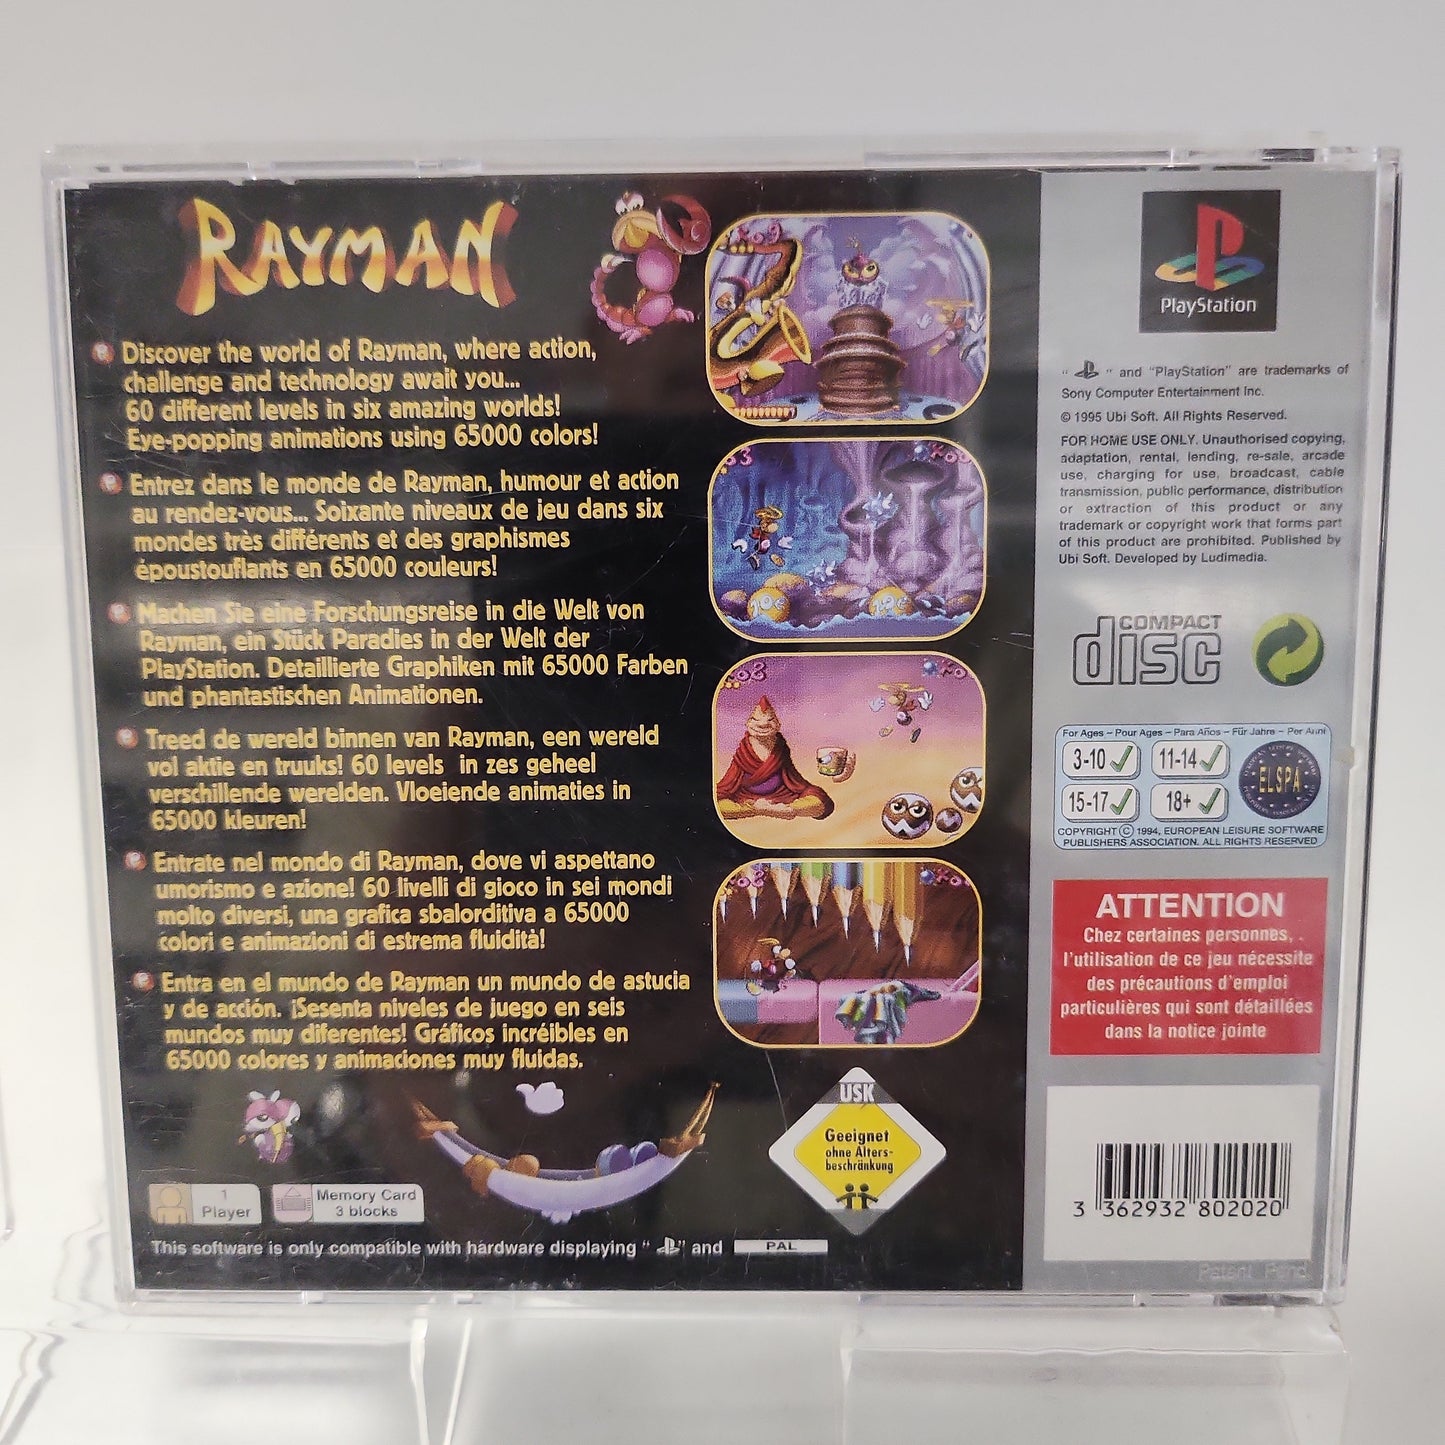 Rayman Platinum Edition Playstation 1